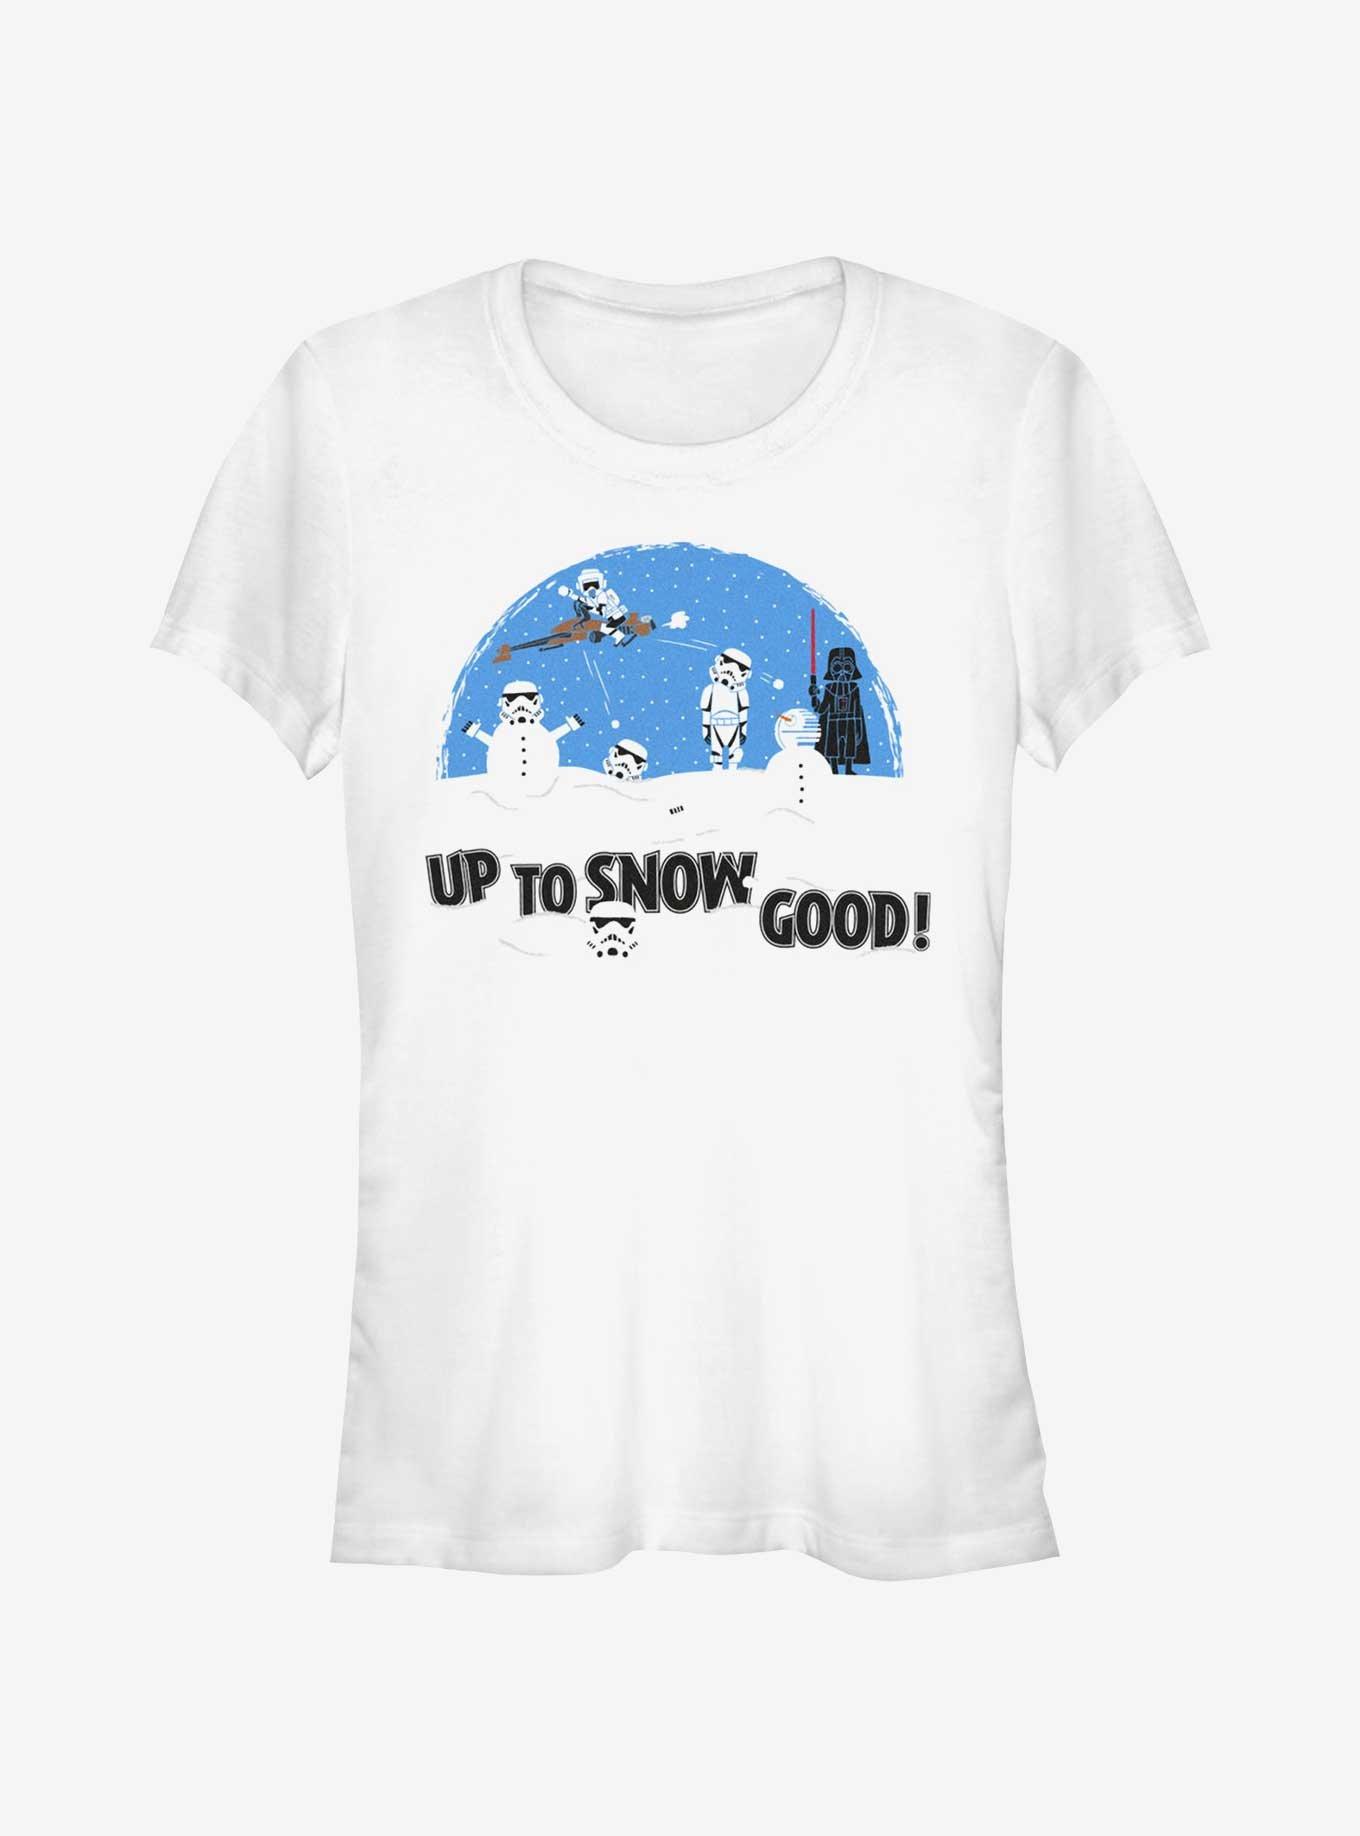 Star Wars Storm Troopers Snow Good Girls T-Shirt